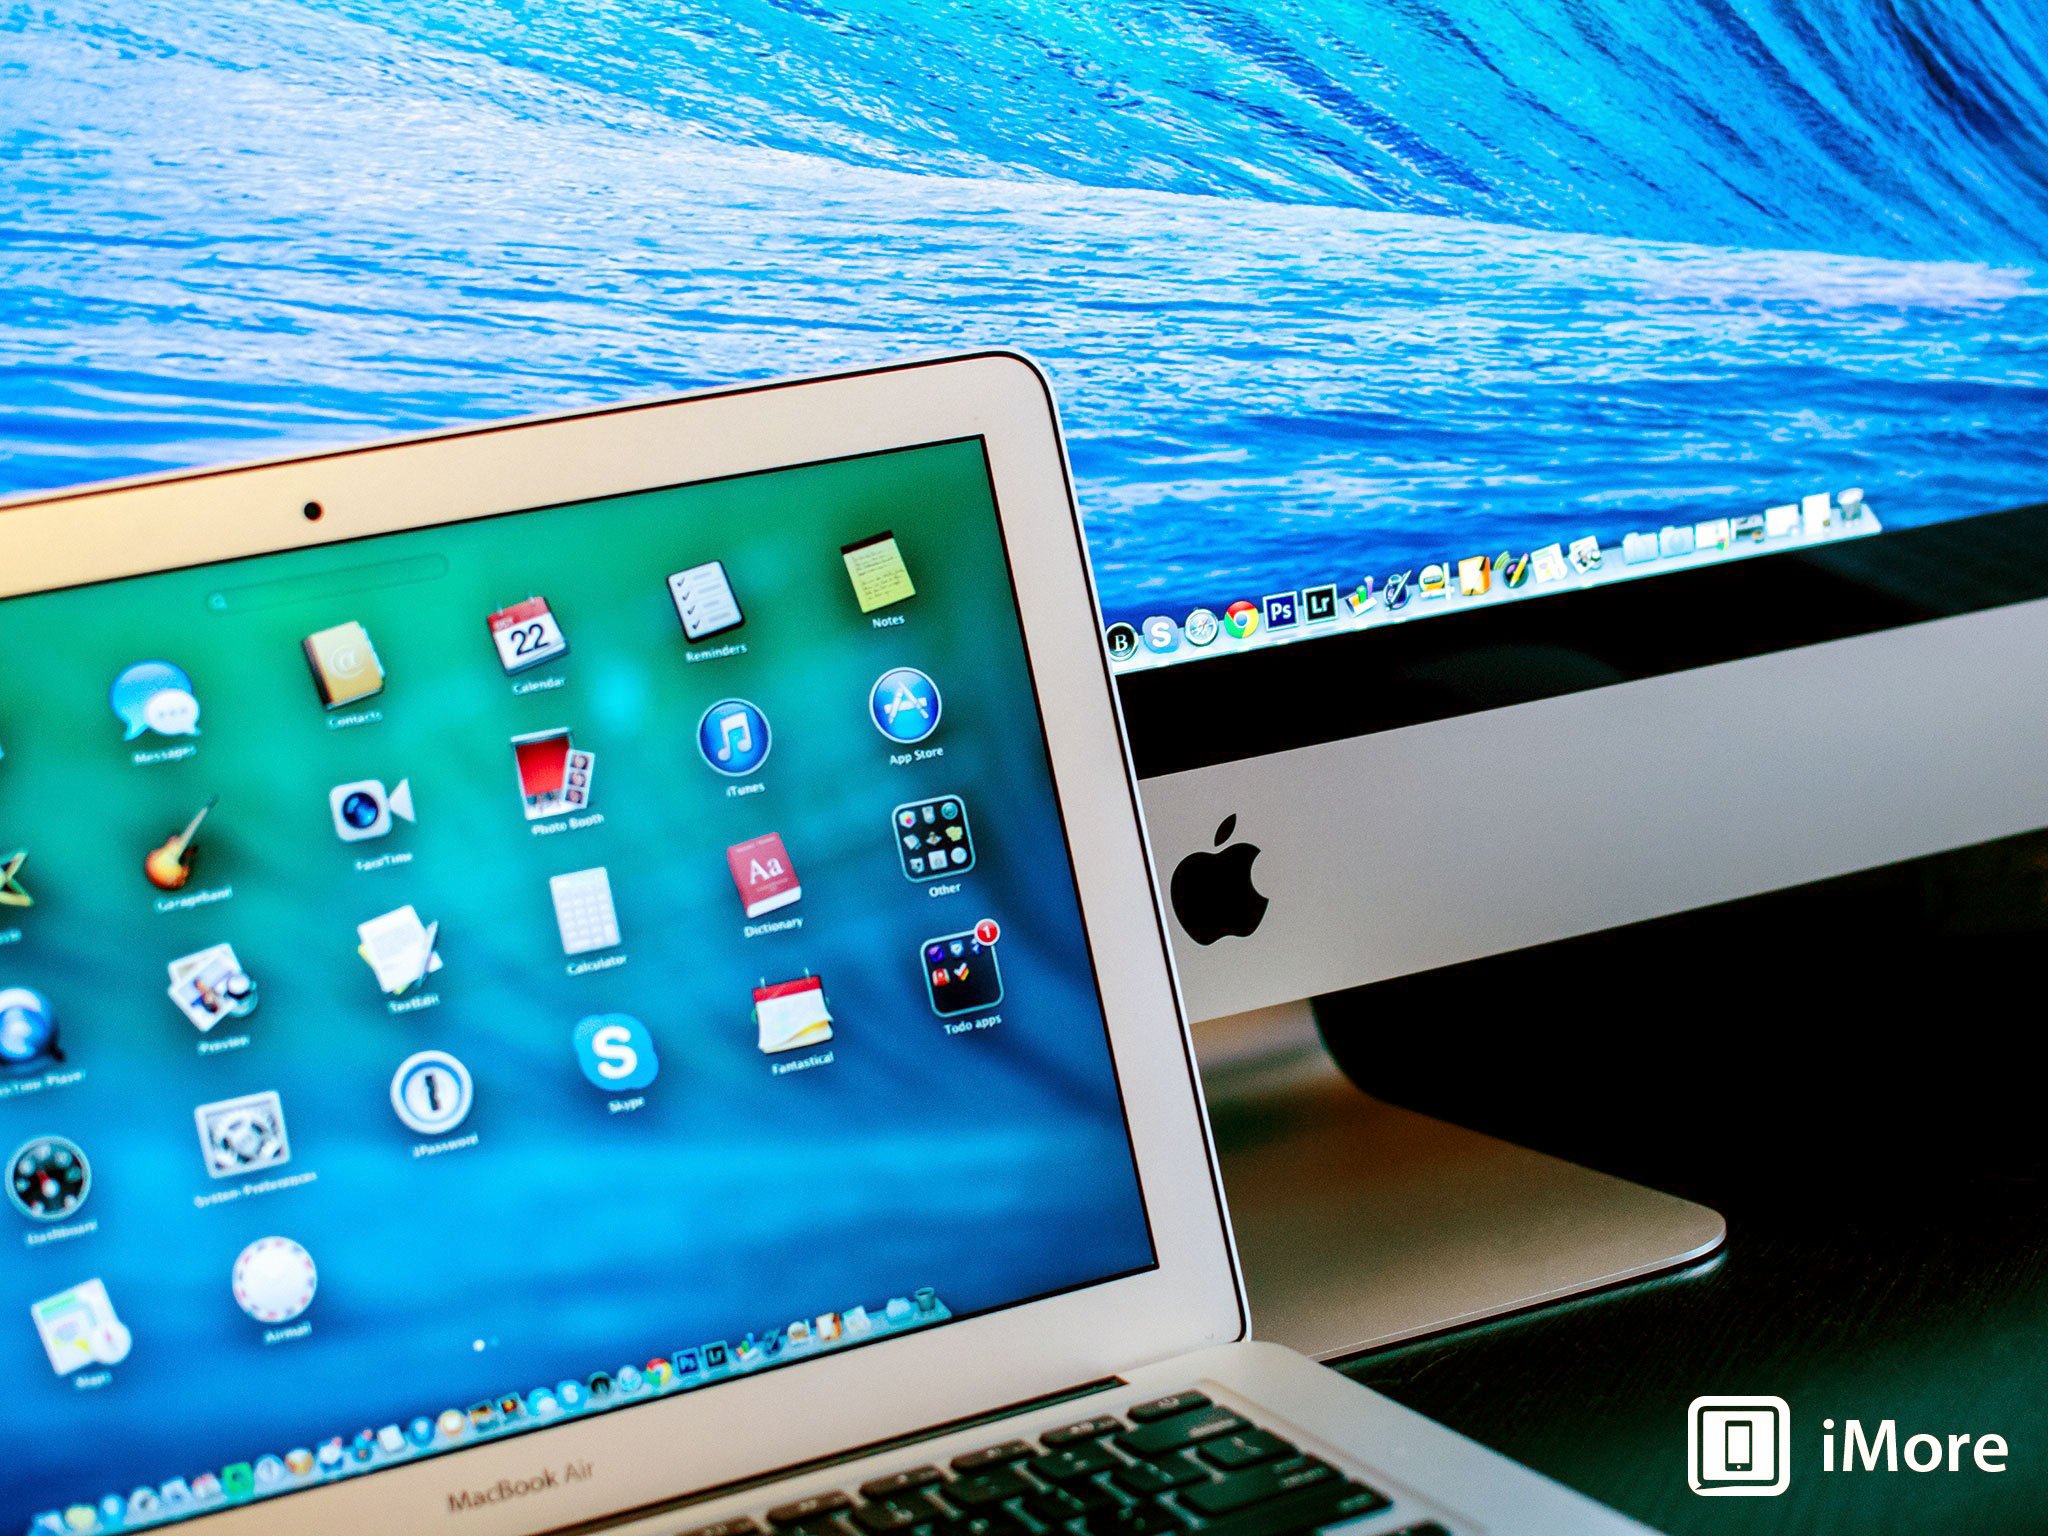 OS X Mavericks review: Top to bottom review of Apple's newest Mac operating system, OS X Mavericks